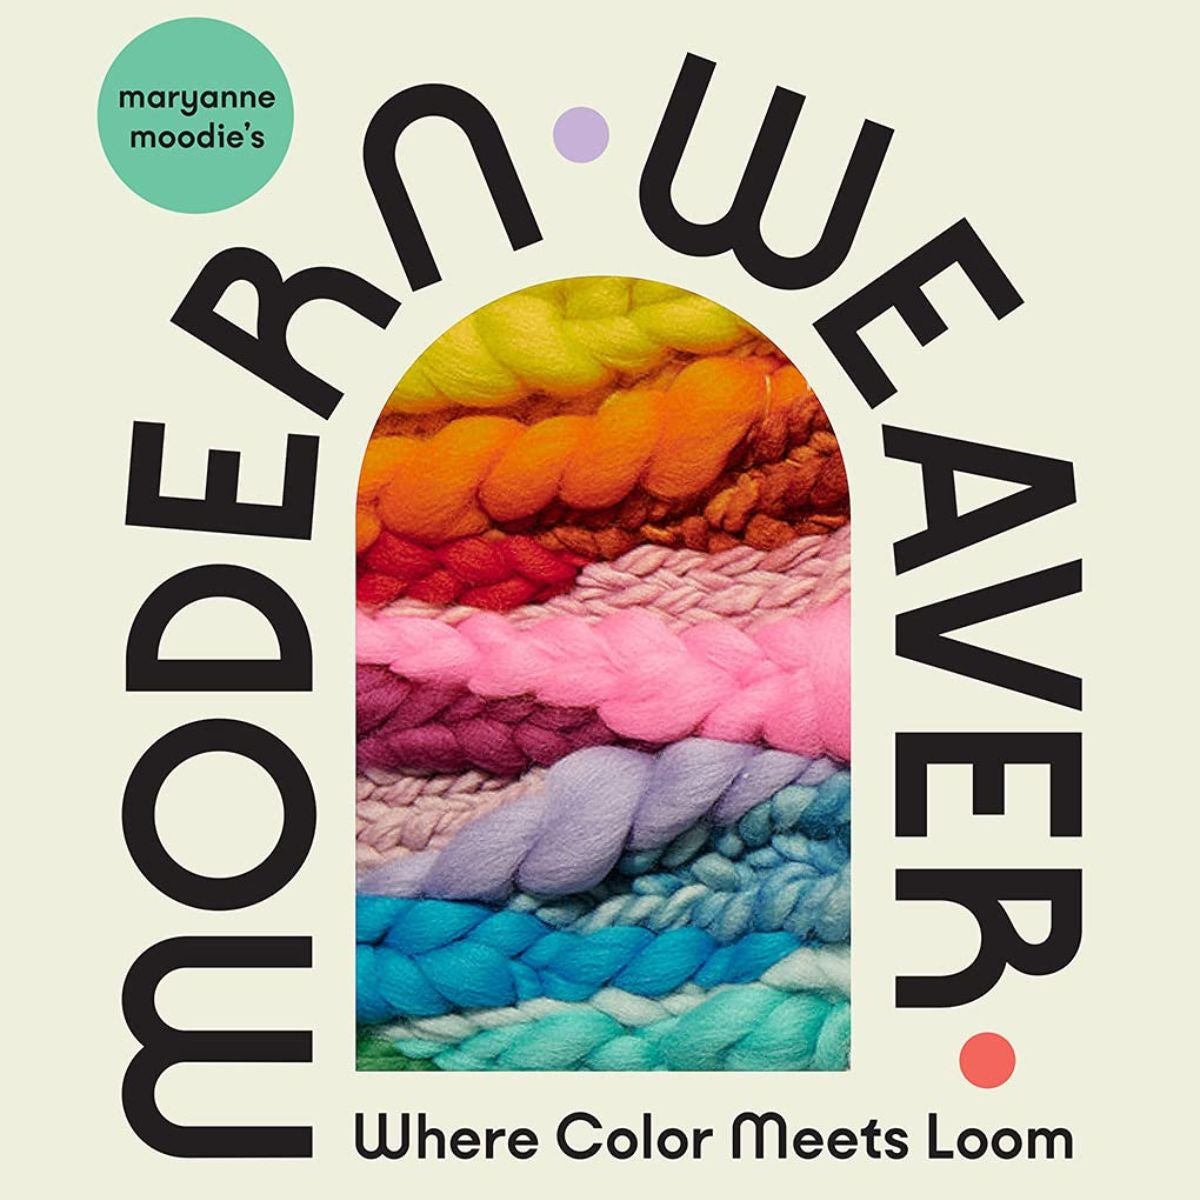 Abrams-Maryanne Moodie’s Modern Weaver-book-gather here online